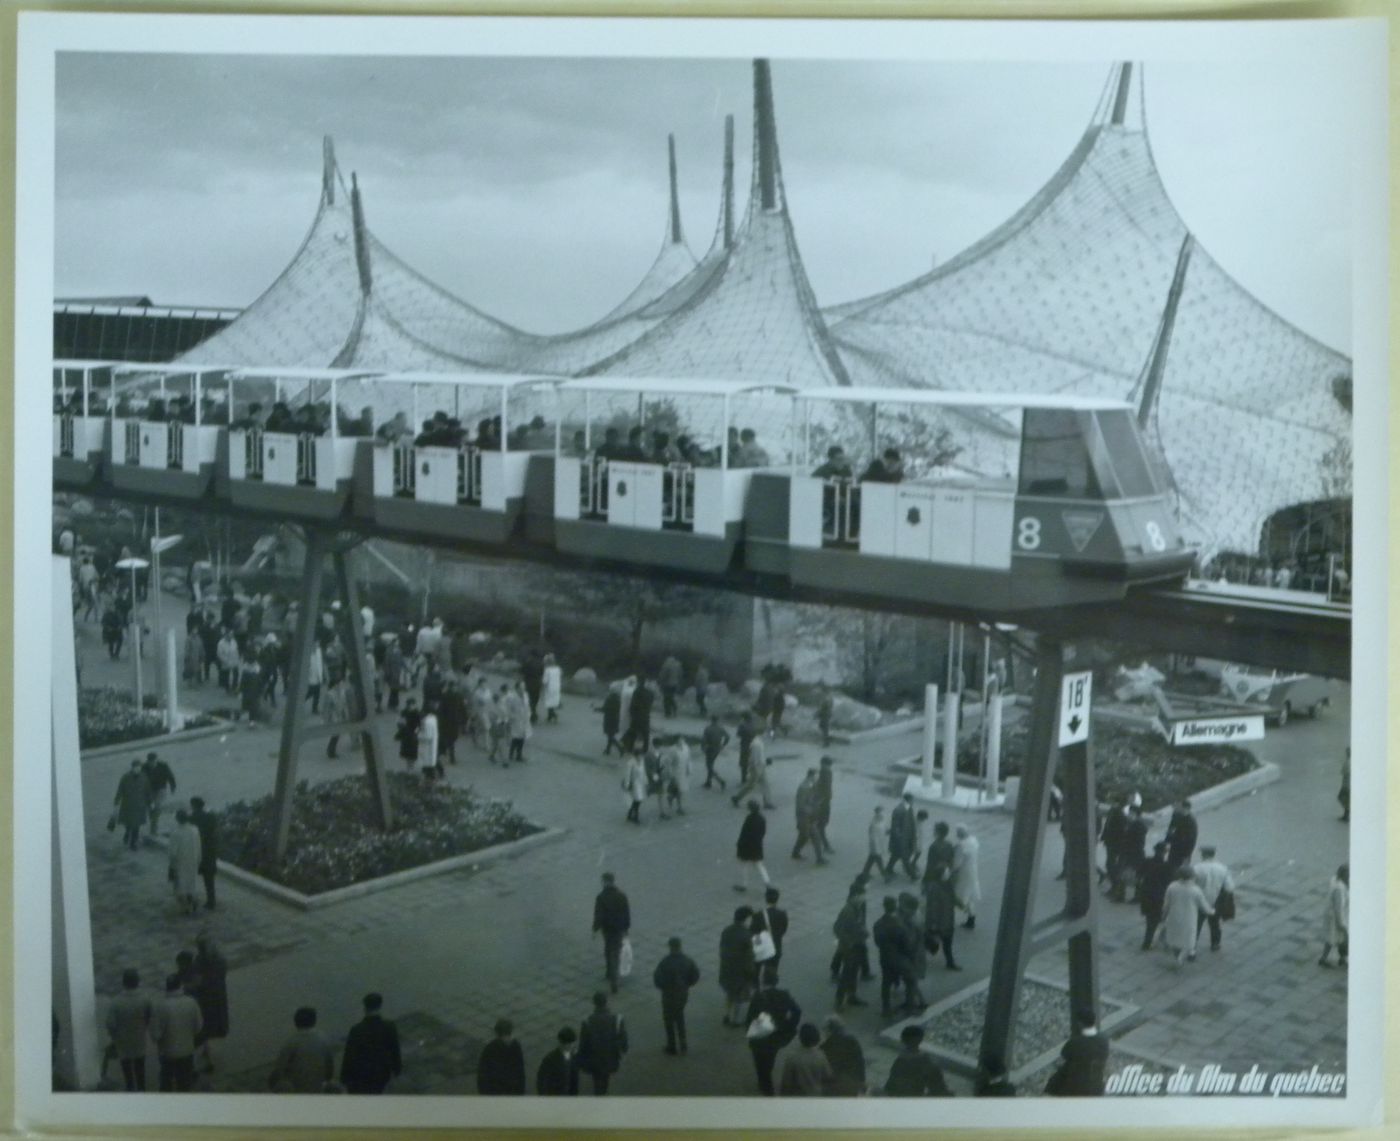 View of the minirail with the German Pavilion as background, Expo 67, Montréal, Québec